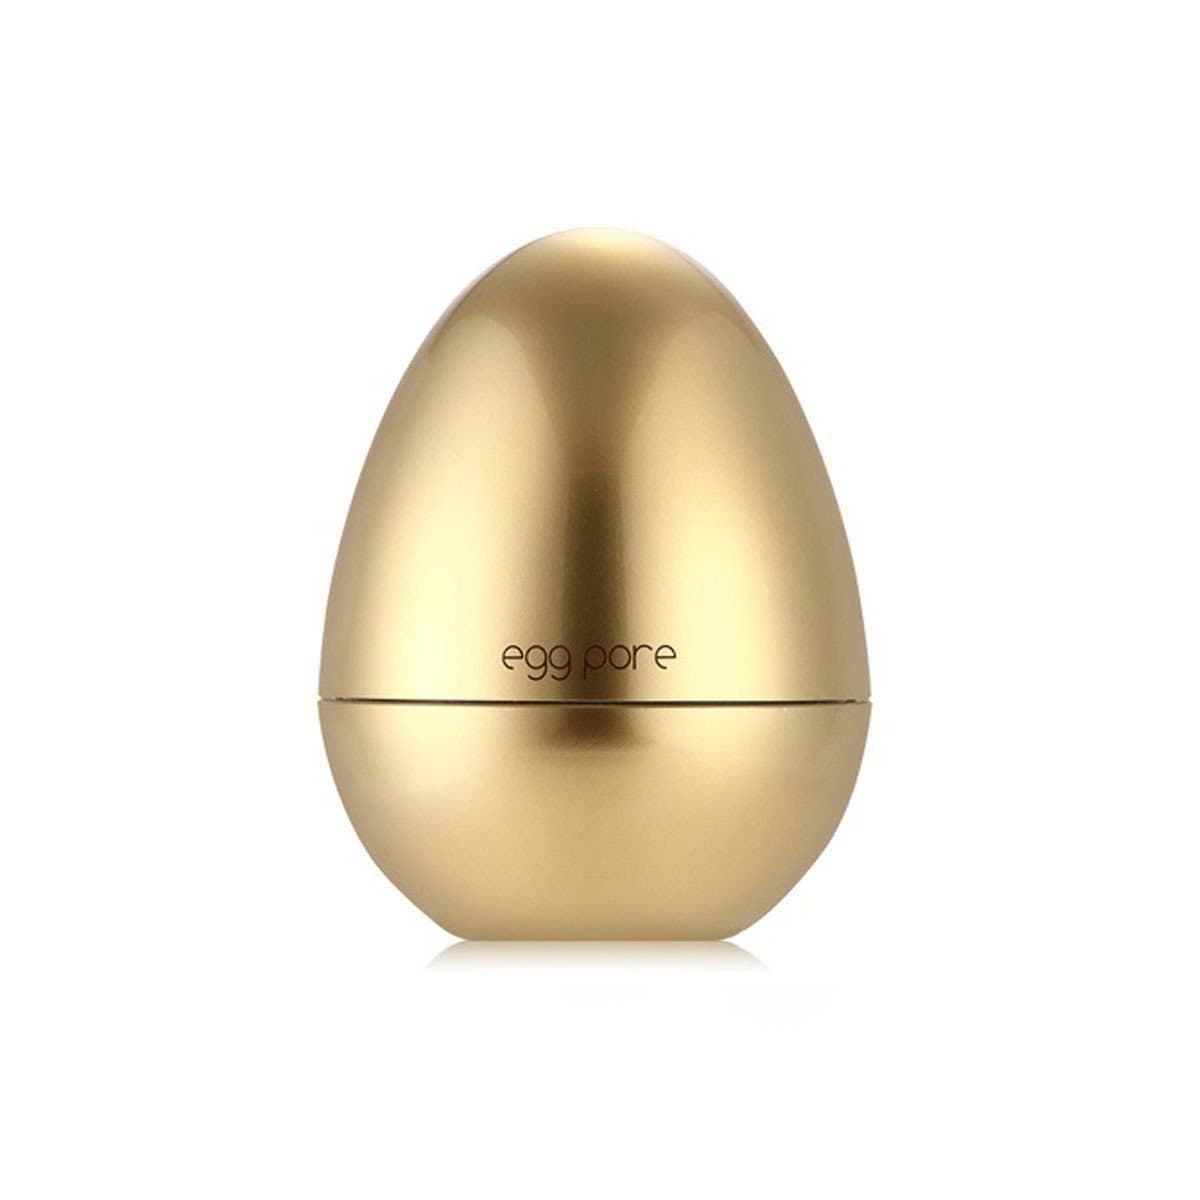 TONYMOLY Egg Pore Silky Smooth Balm Kawaii Gifts 8806358556402